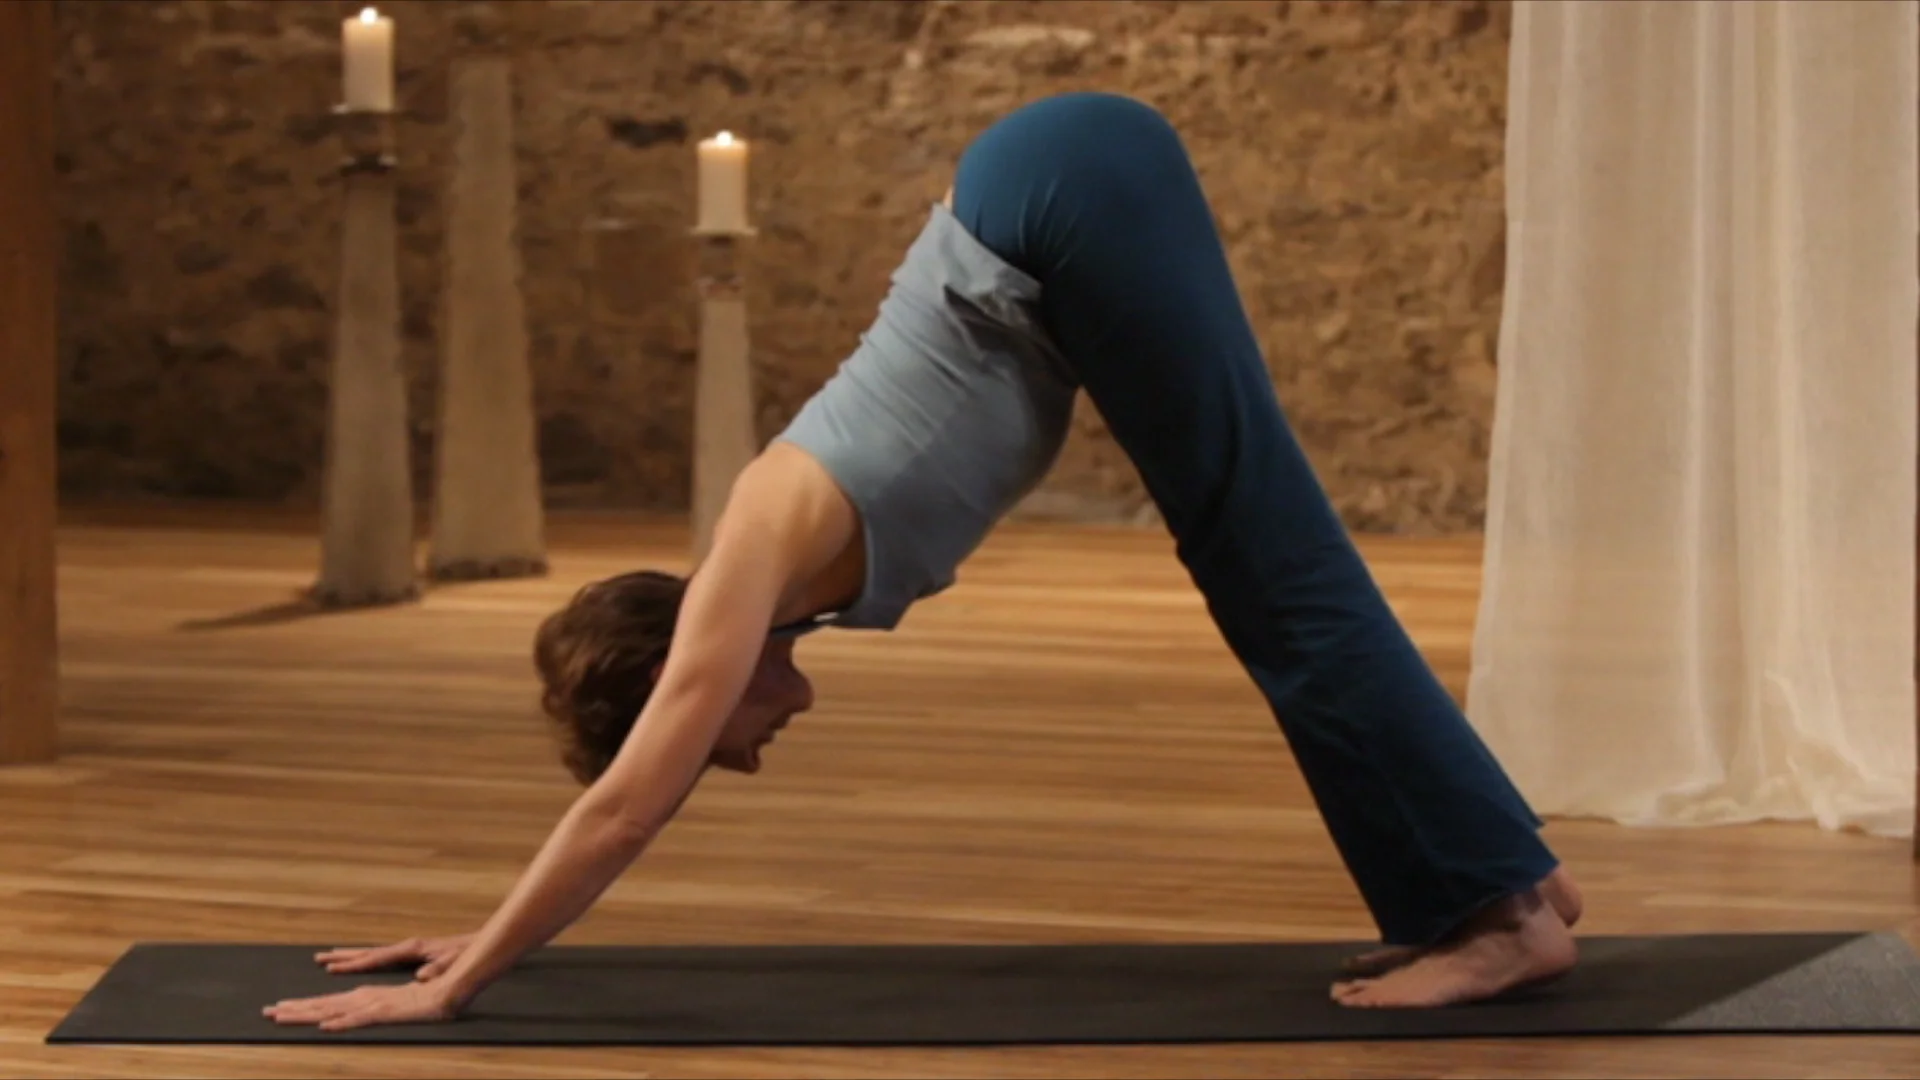 Yoga for Vitality with Jurian Hughes on Vimeo